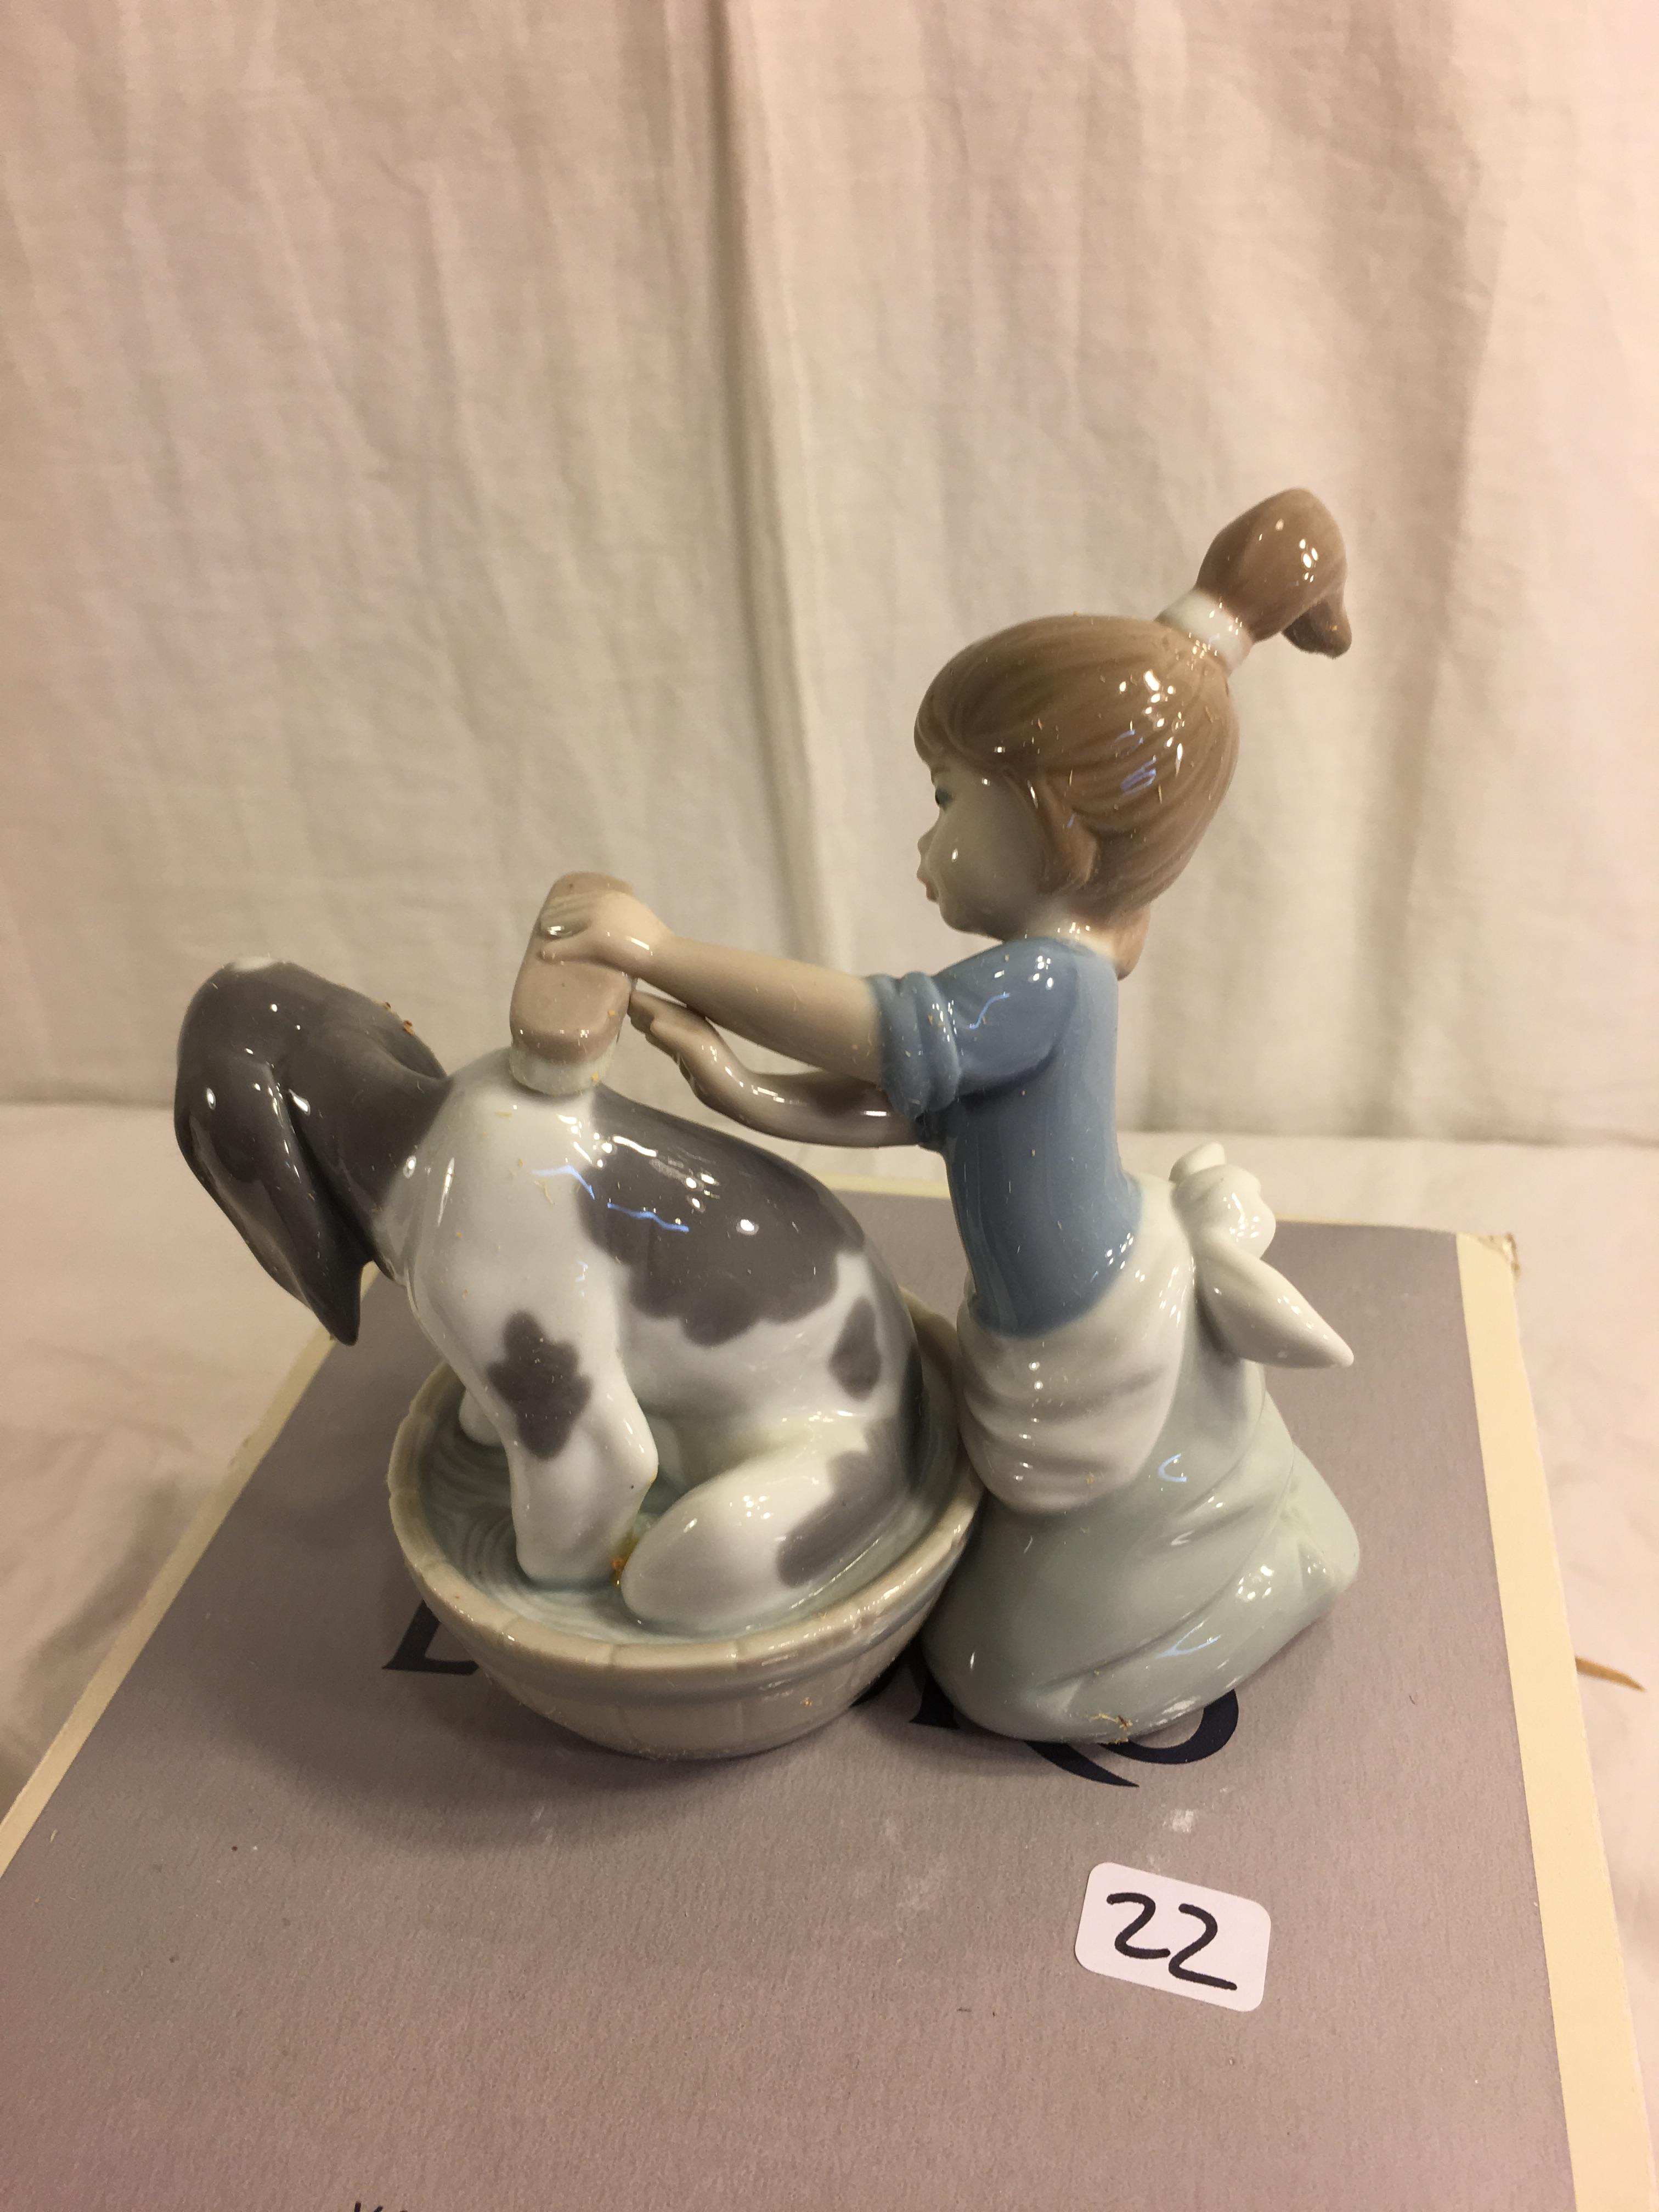 Collector Lladro "bashful Bather" #5455 Figurine Girl Bathing Dog Box Size:8"t by 7"Width Box